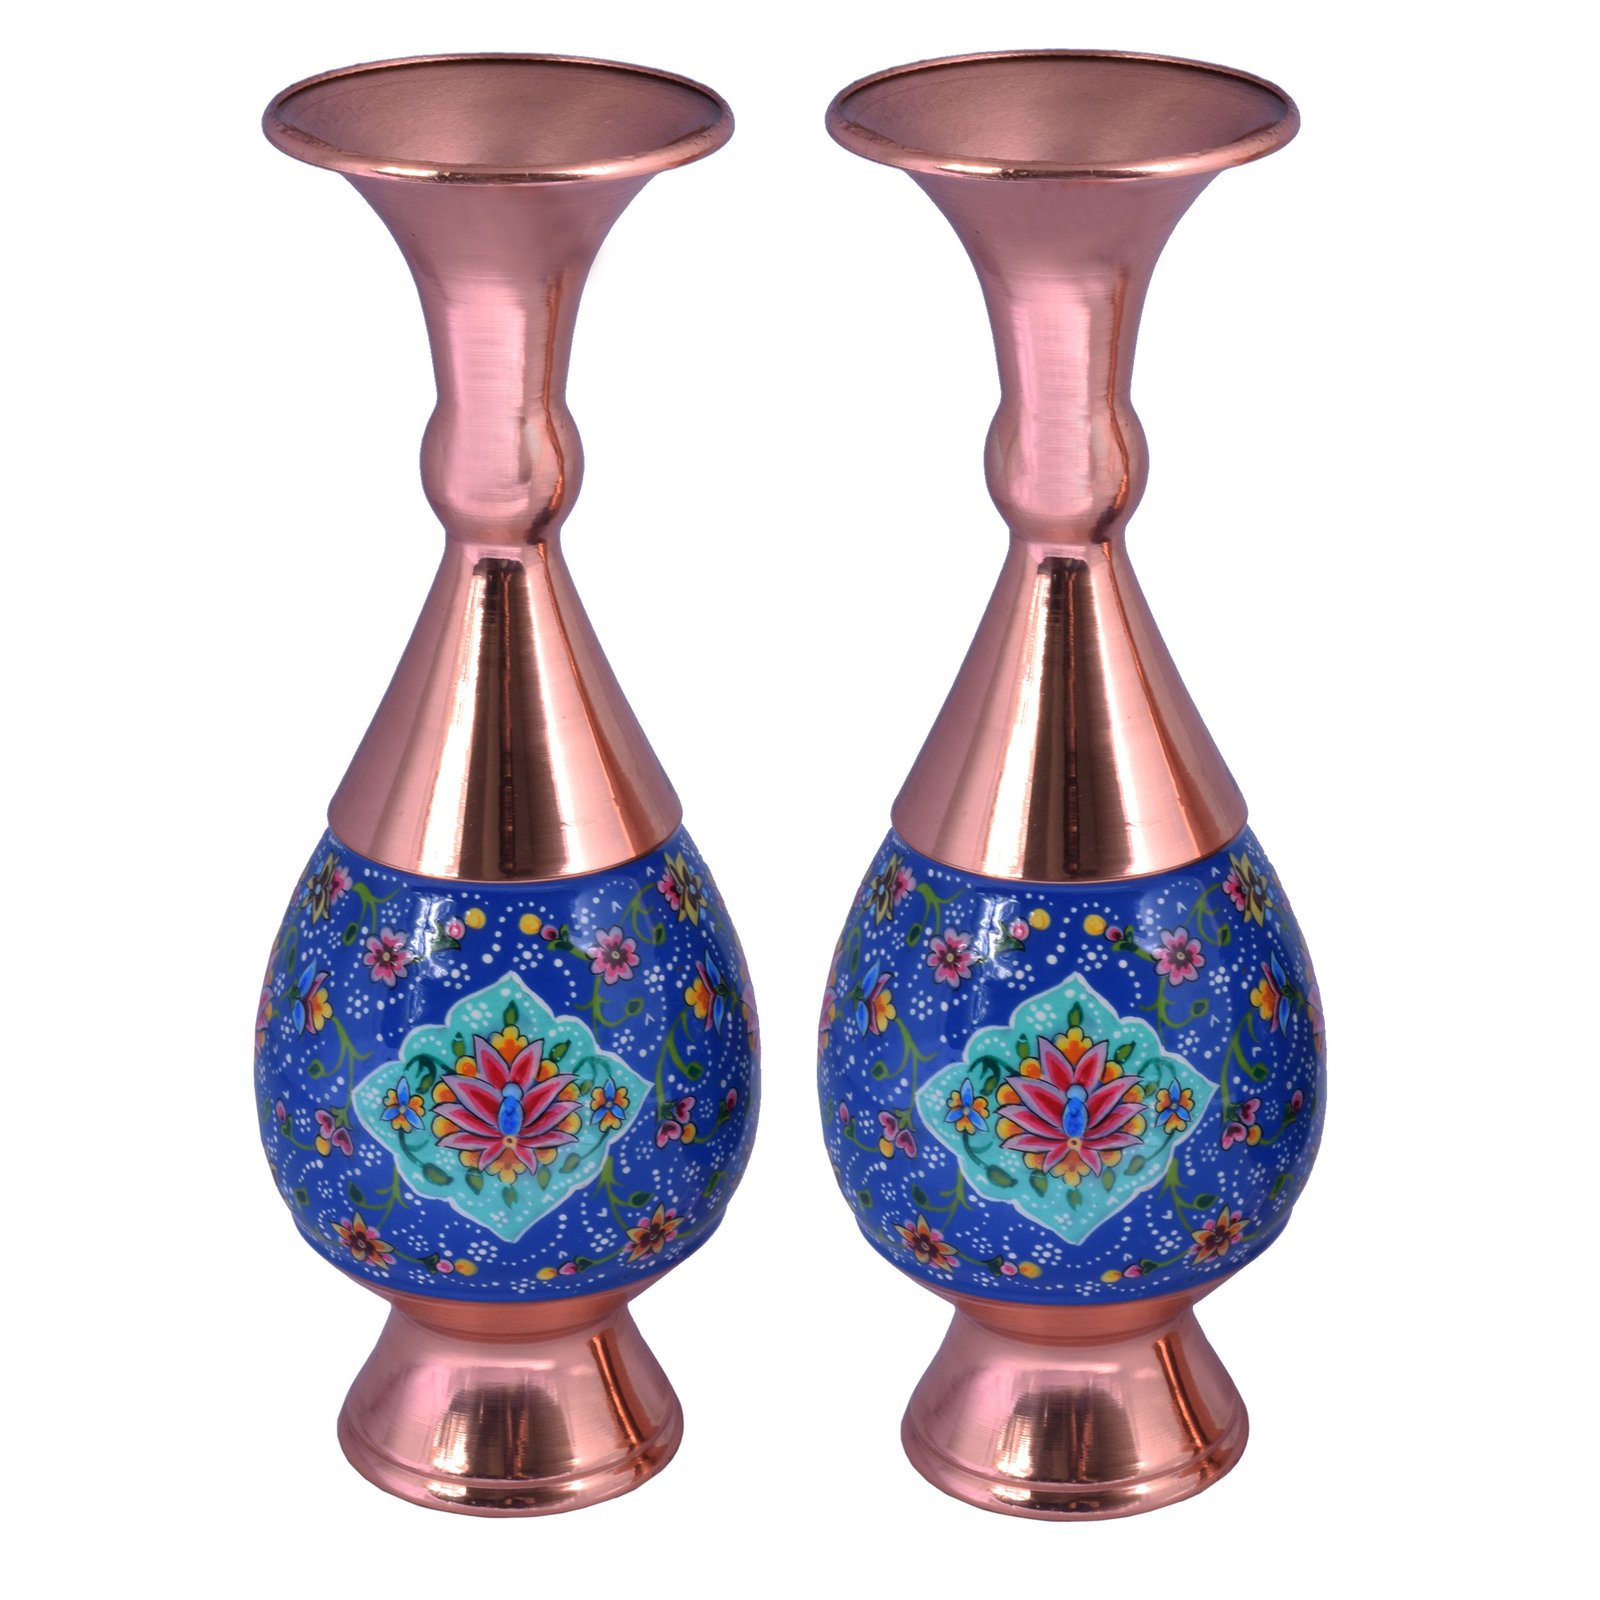 Enamel Handicraft Copper pot code 040002 collection 2 pcs,prices of enamel jar,prices of enamel pot,shop enamel, shopping enamel